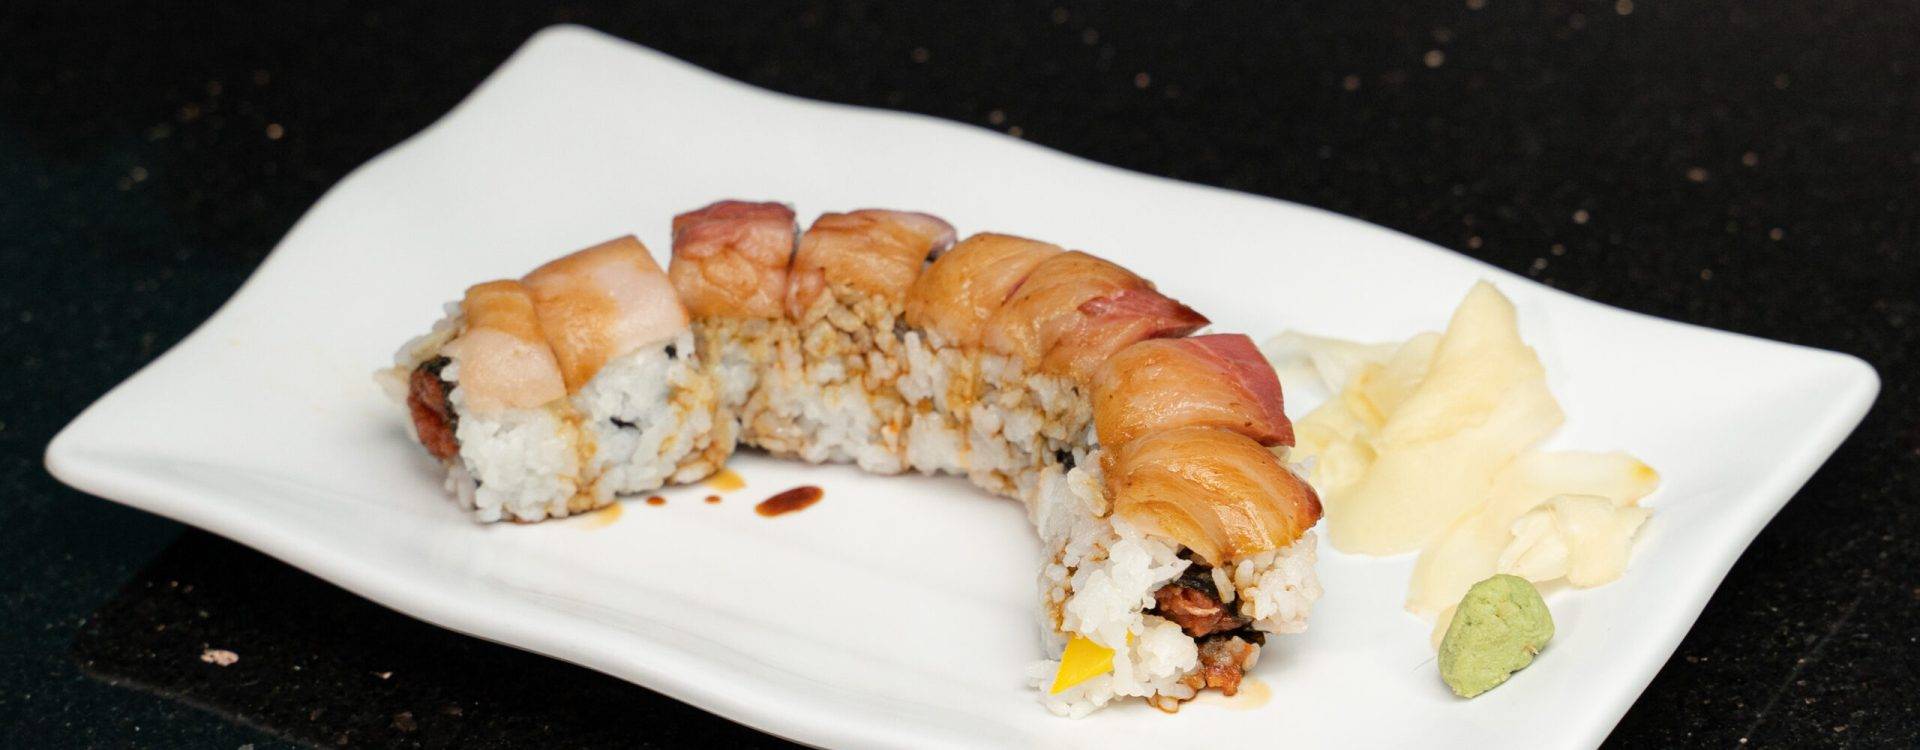 bff asian grill sushi rolls